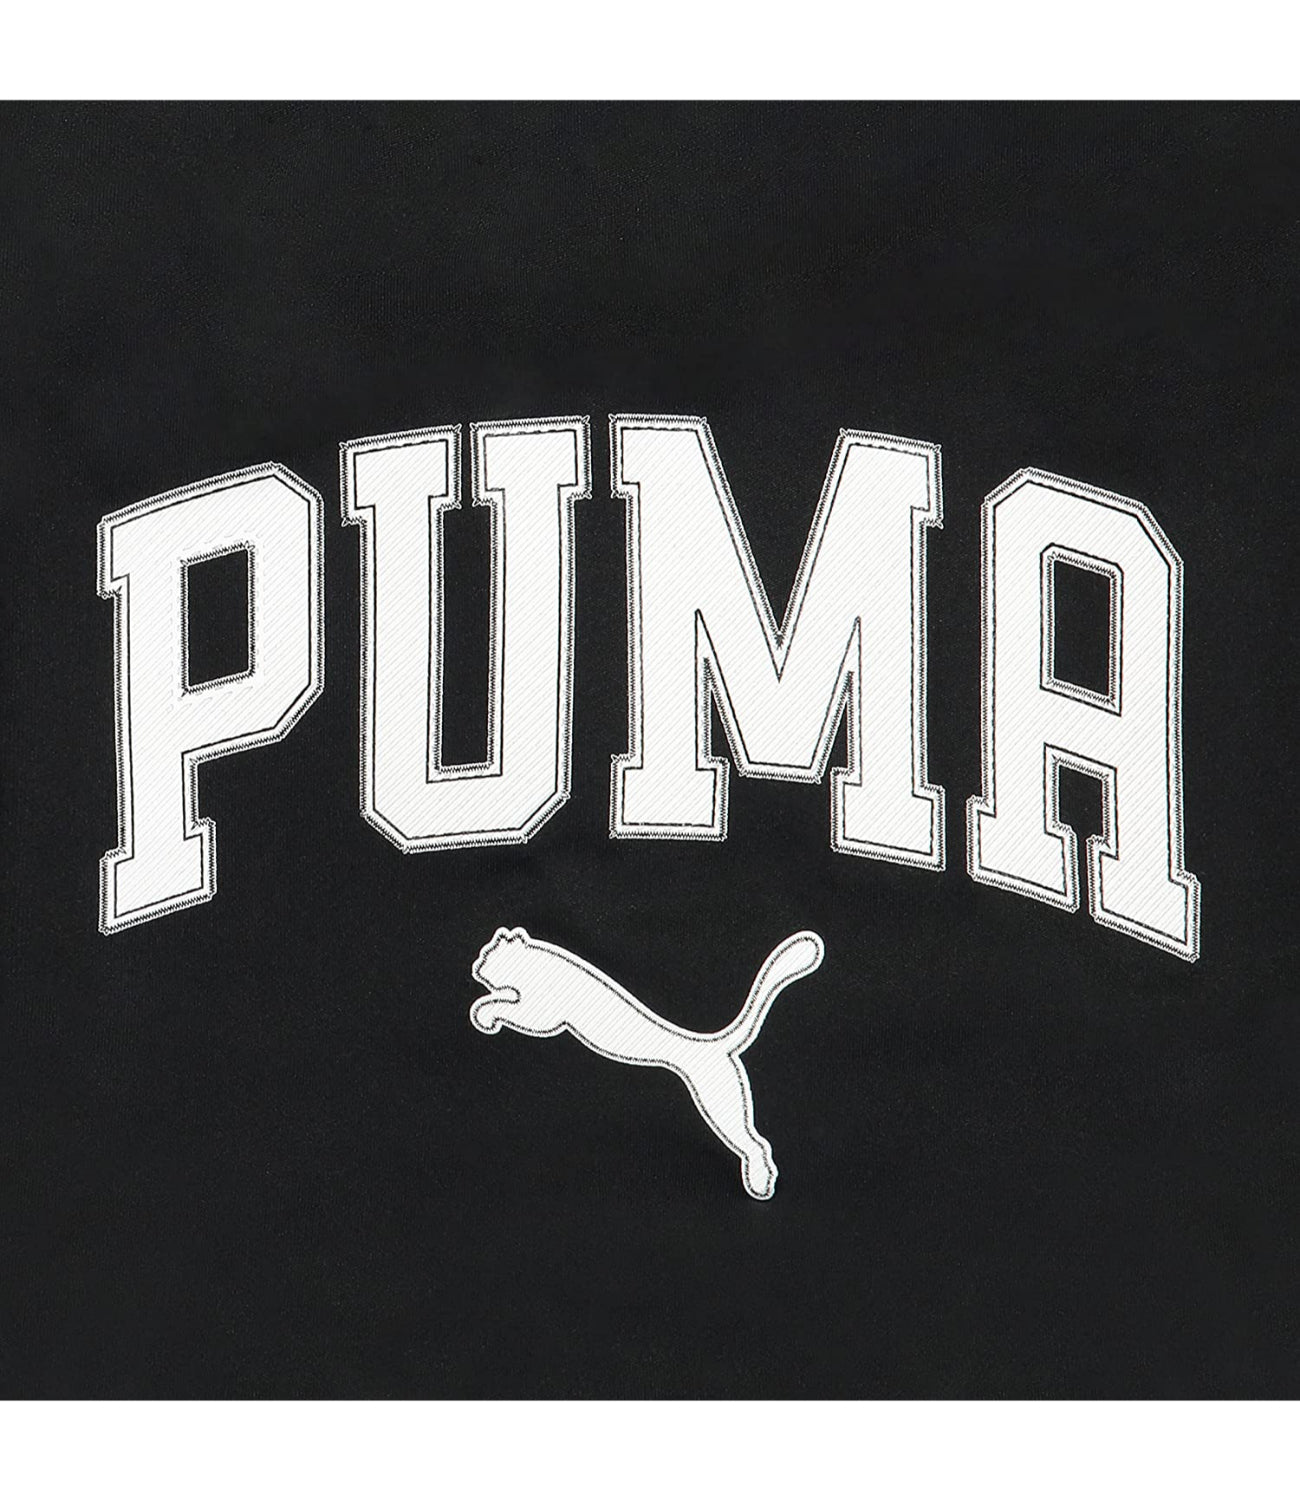 PUMA Boys 4-7 Athletic Mesh Short